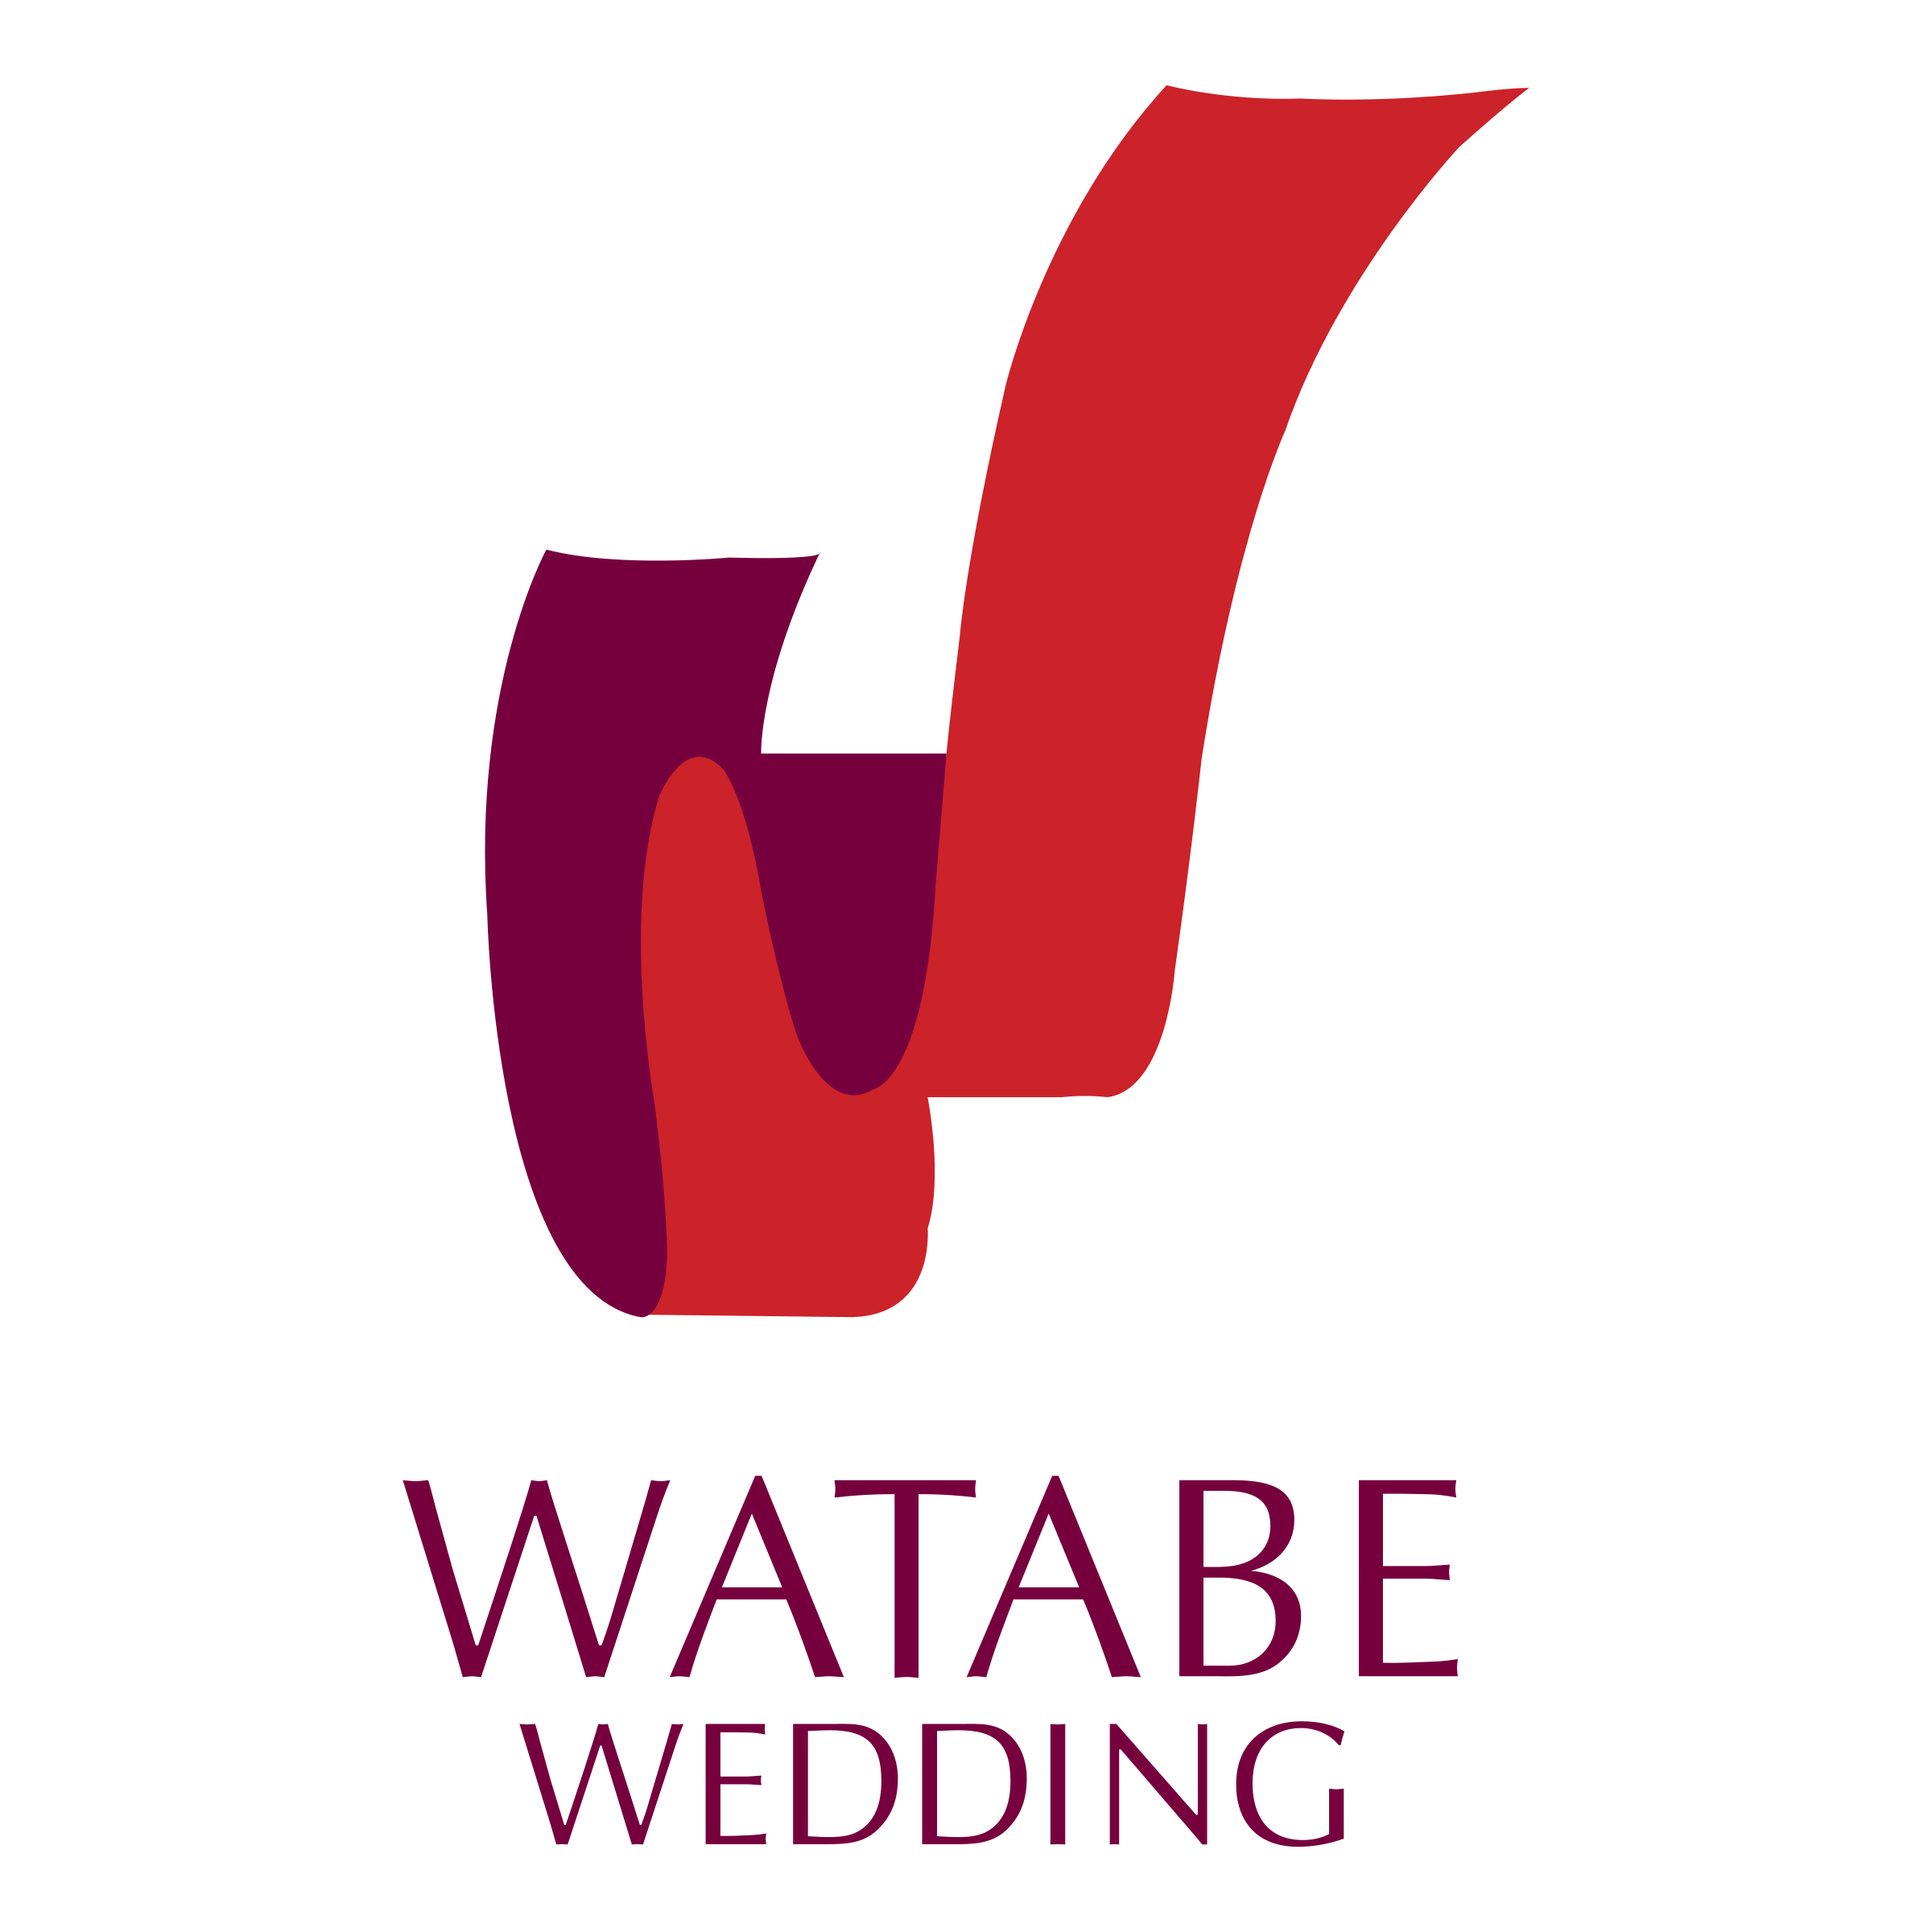 Red Wedding Logo - Watabe Wedding Logo PNG Transparent & SVG Vector - Freebie Supply